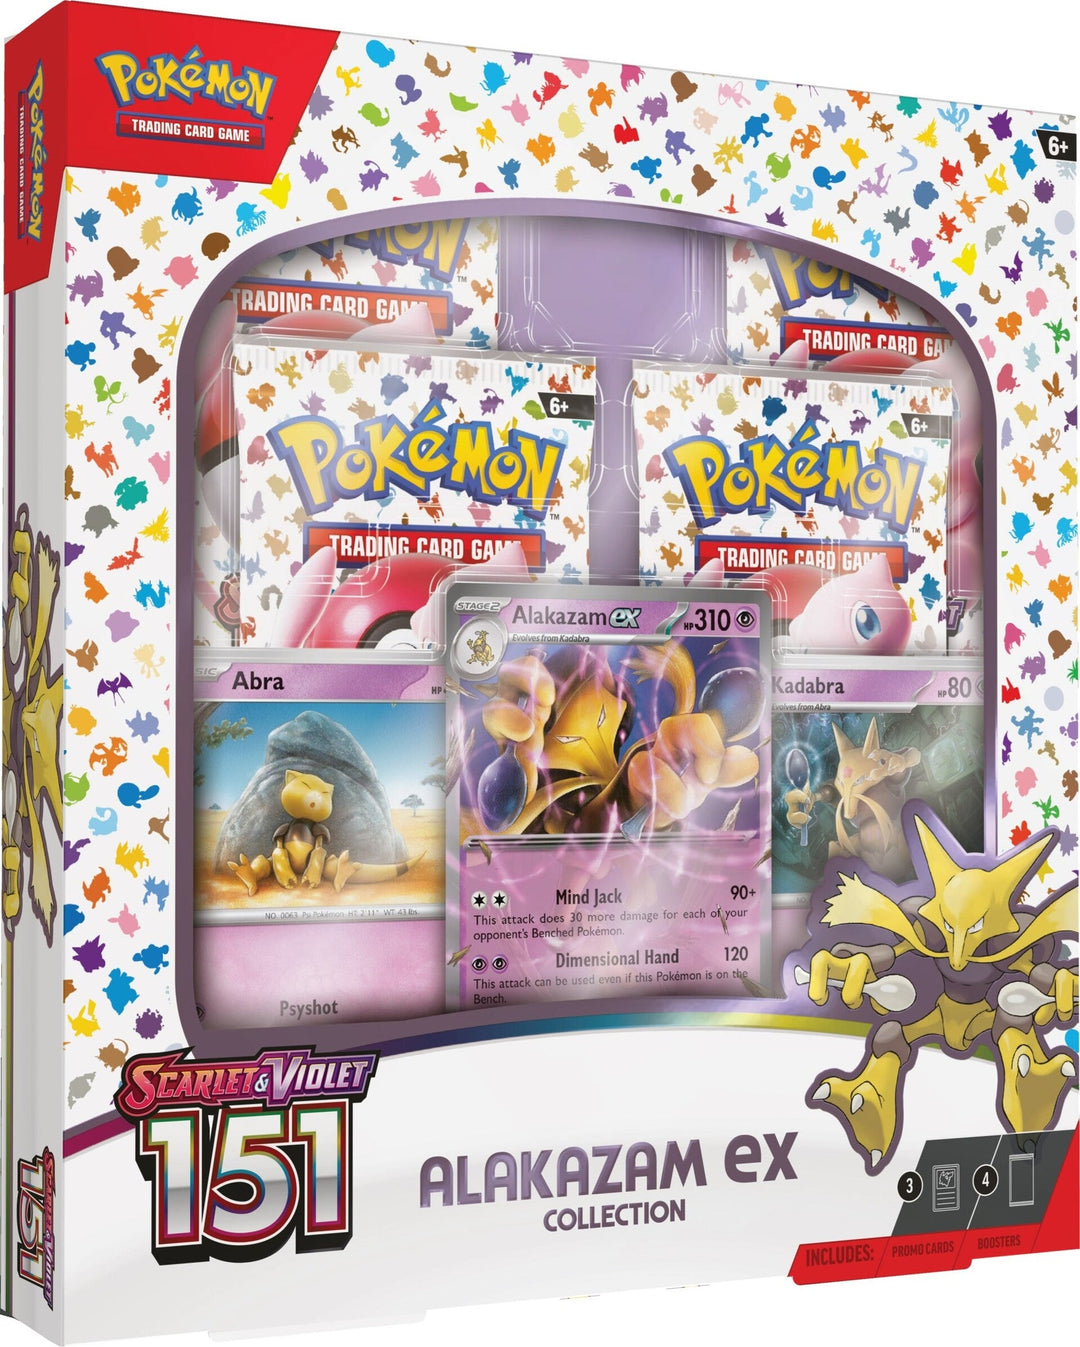 Pokémon TCG: Scarlet & Violet-151 Alakazam Ex Box SV4 (Pre-orders)